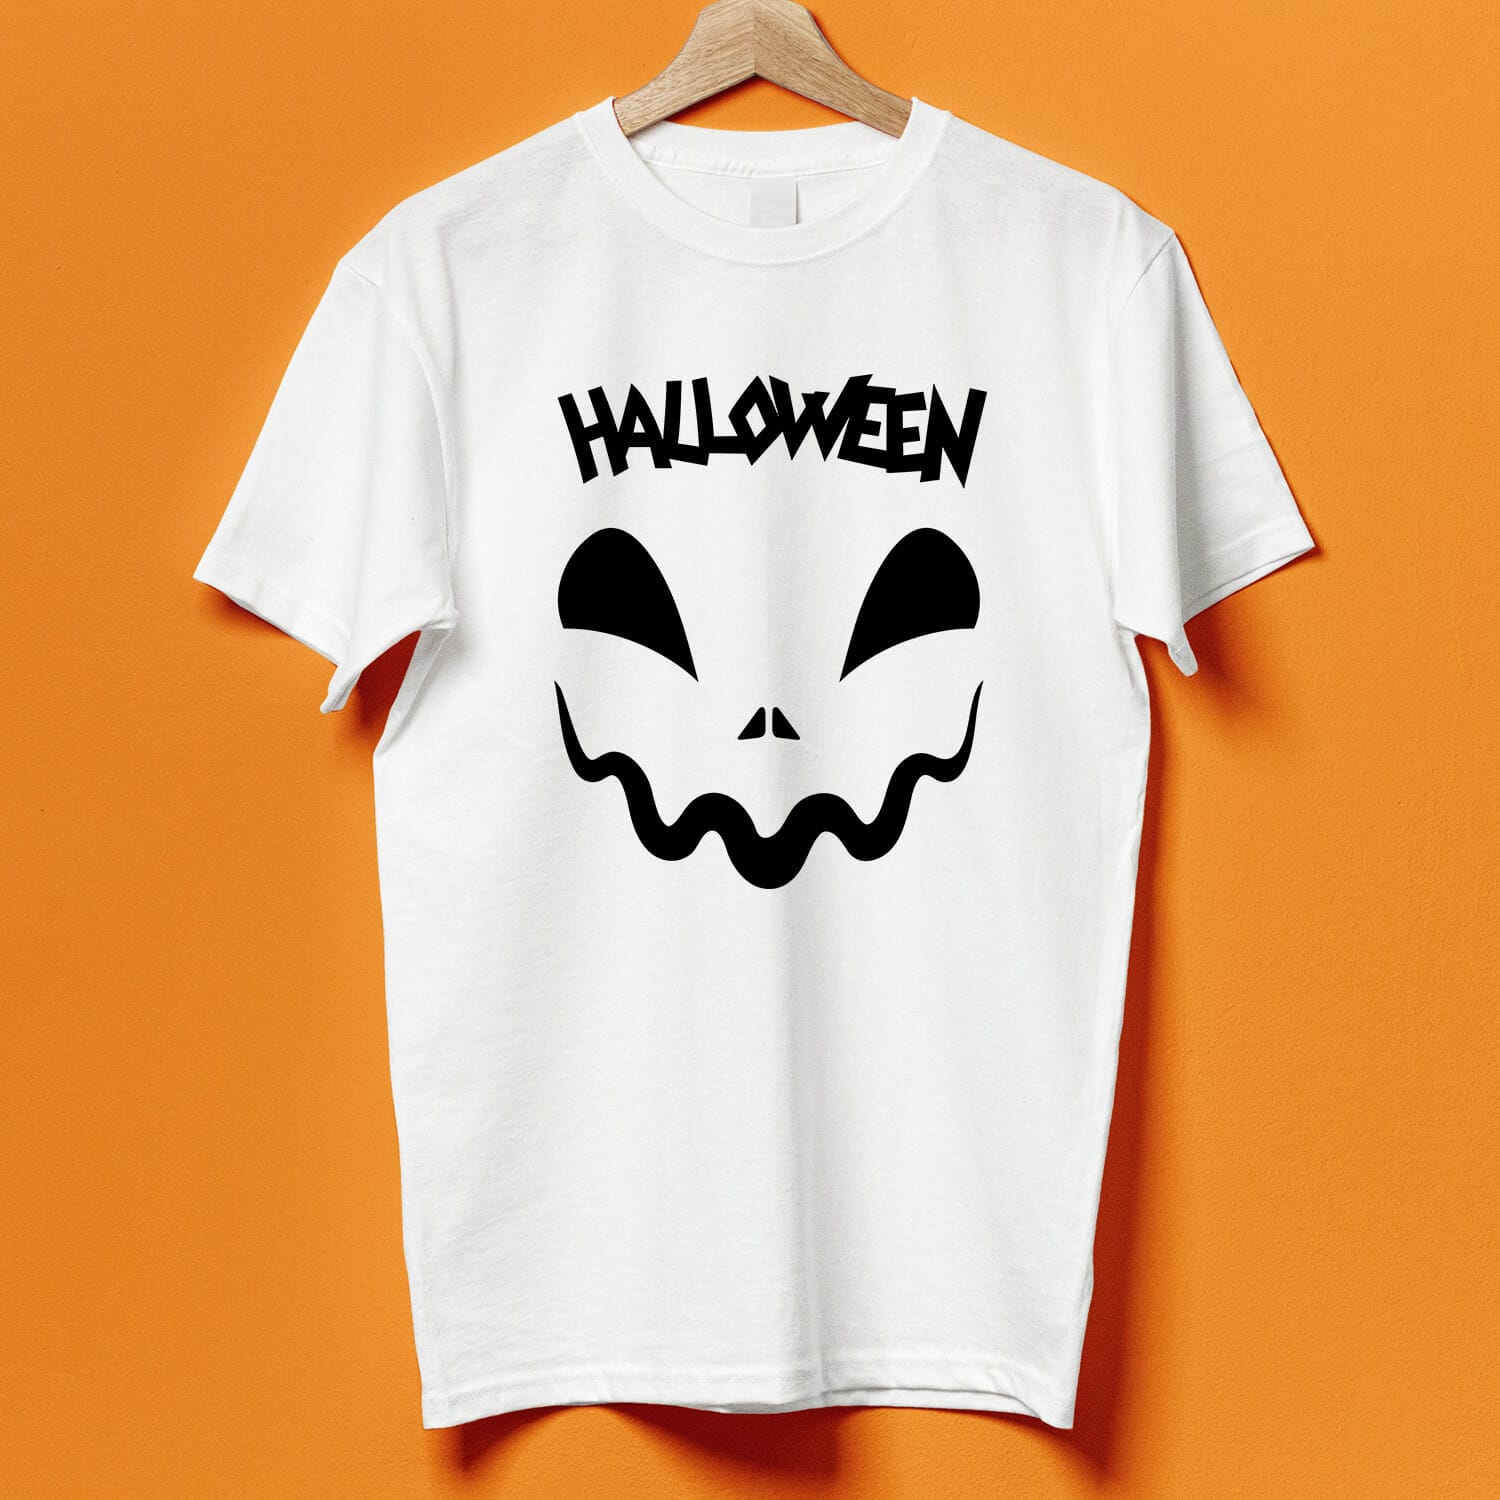 Halloween Scary face T-shirt Design